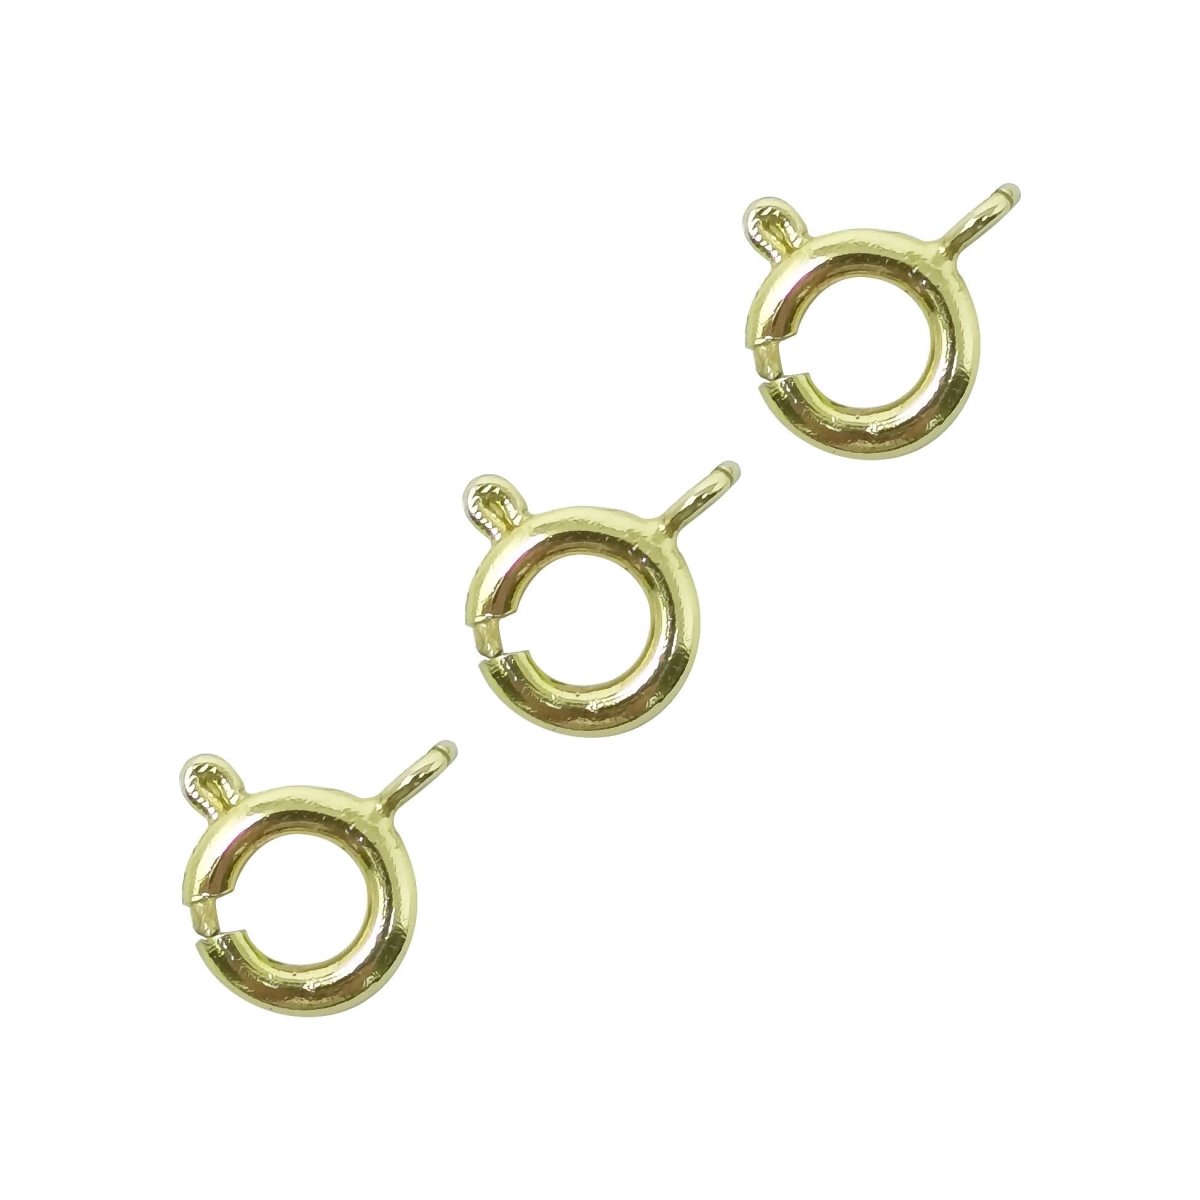 1Pc 14K Gold Spring Gate Ring, Push Gate ring, 7mm Round Ring CharmHolder14K Gold Filled Rose Gold,WhiteGoldClasp for Connector Charm Holder - DLUXCA